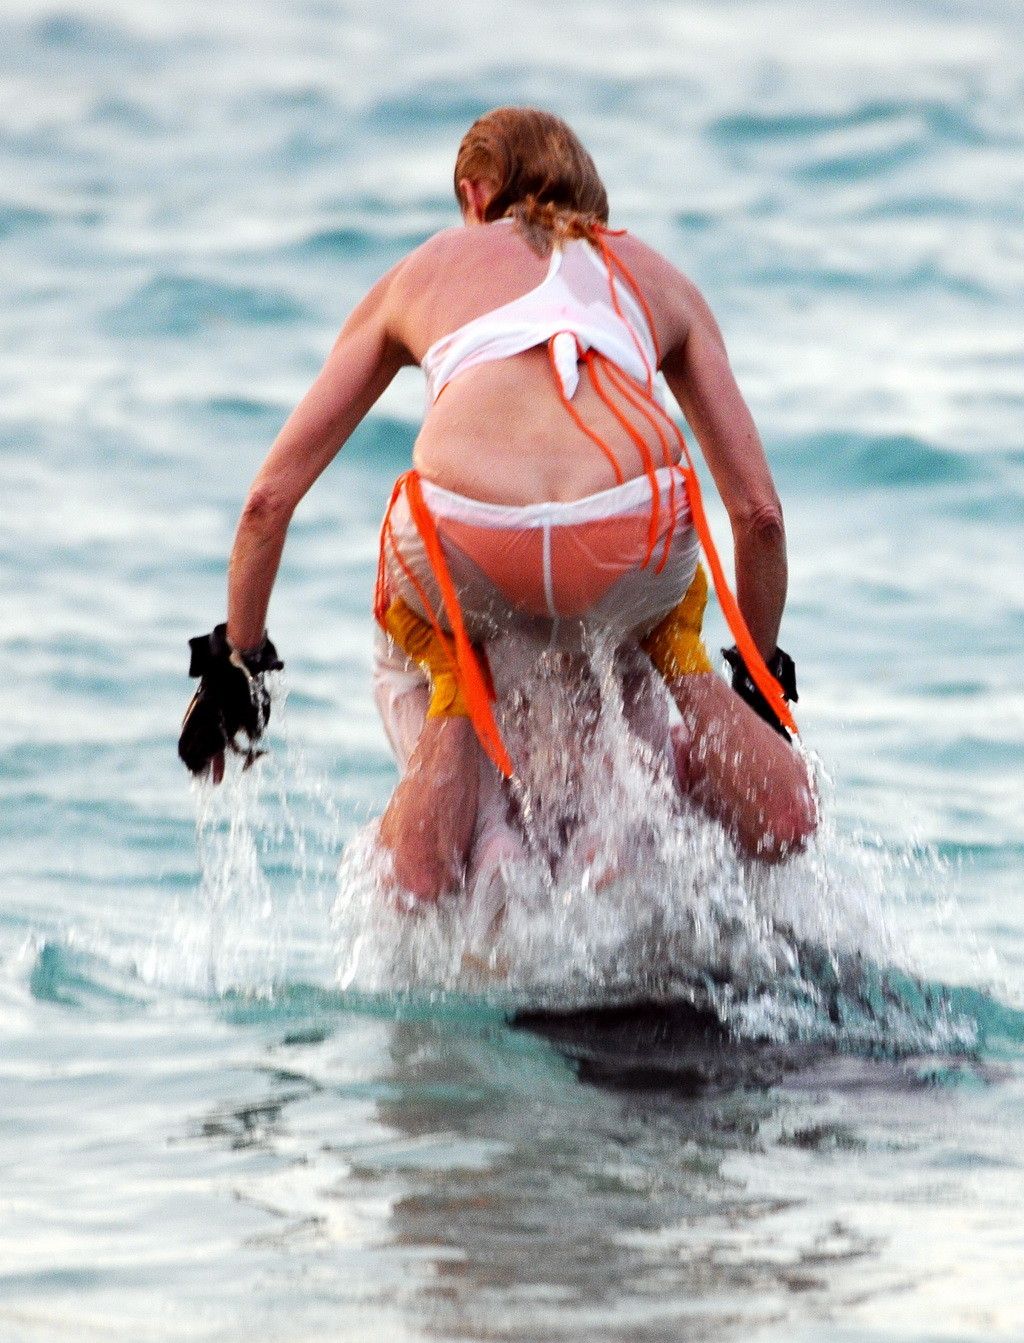 Nicollette Sheridan showing her wet bikini body while training on the beach in S #75265629